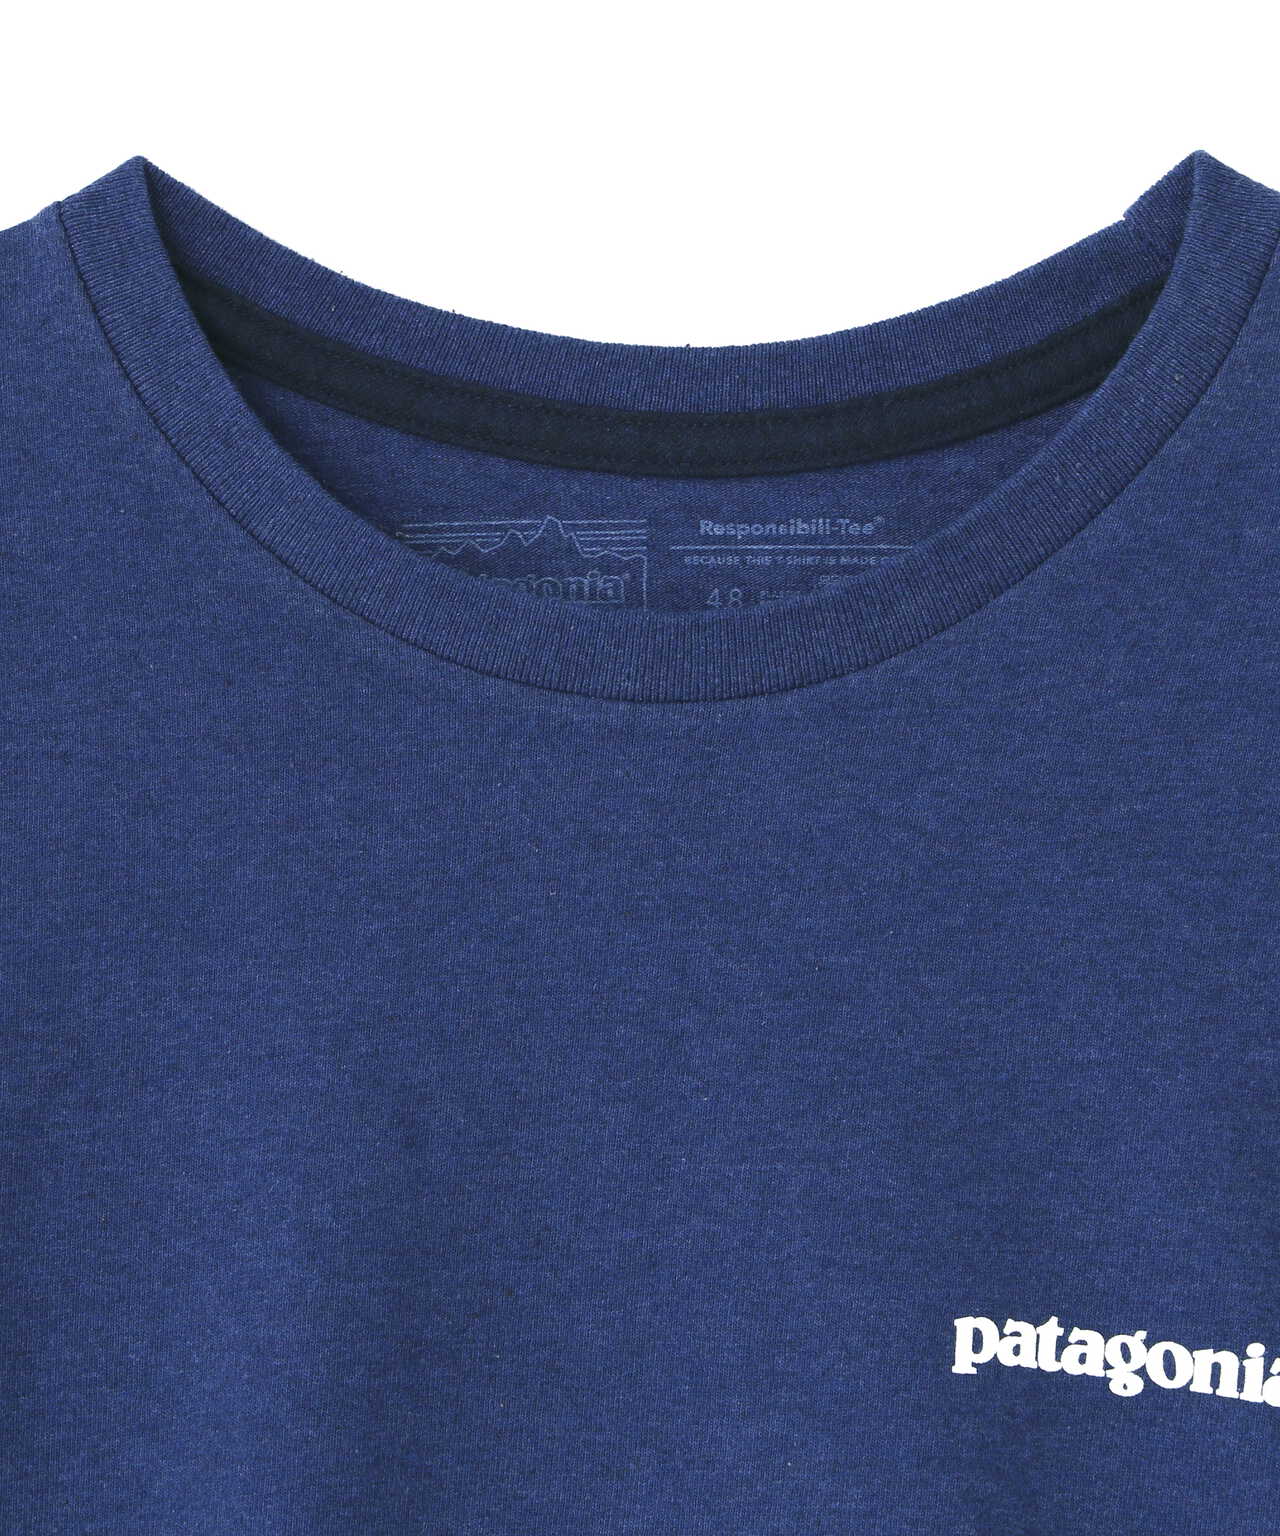 Patagonia/パタゴニア　メンズ・ロングスリーブ・P-6ロゴ・レスポンシビリティー　38518